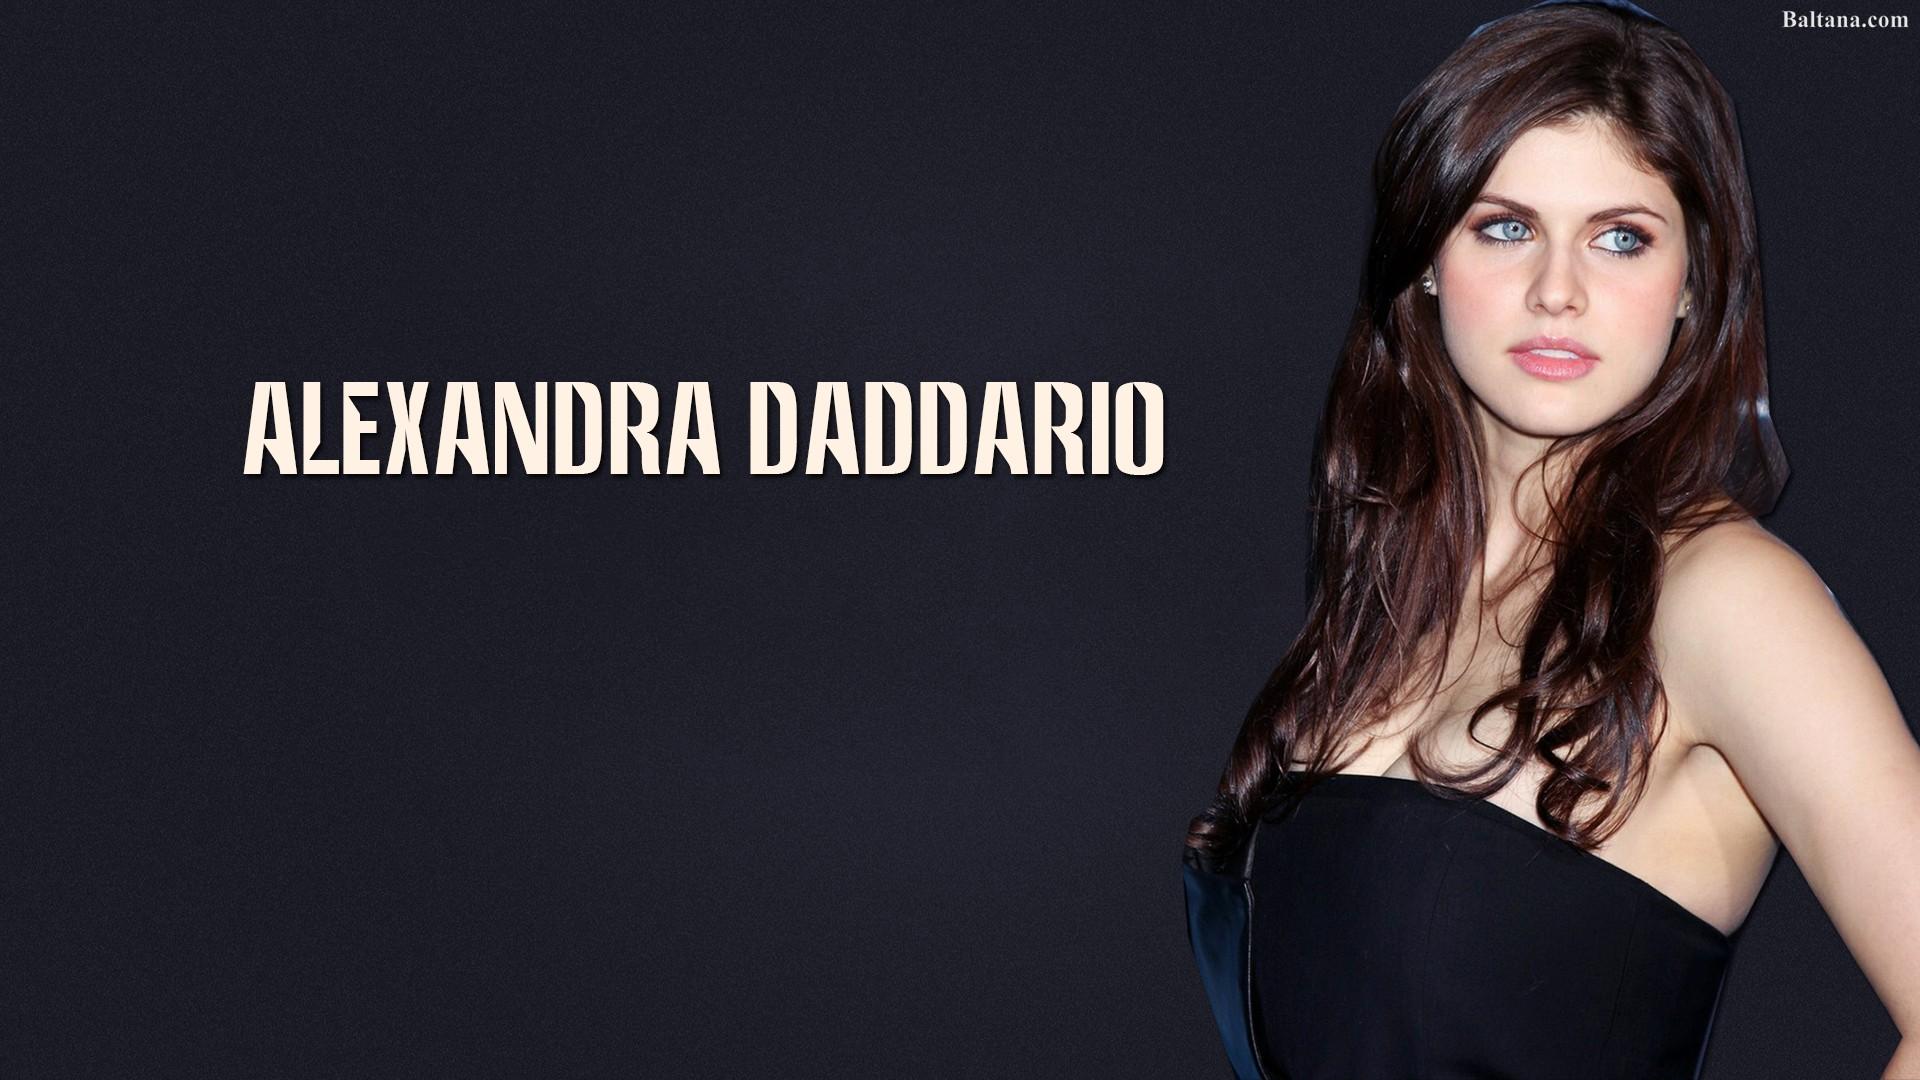 Alexandra Daddario 2019 Photoshoot Wallpapers